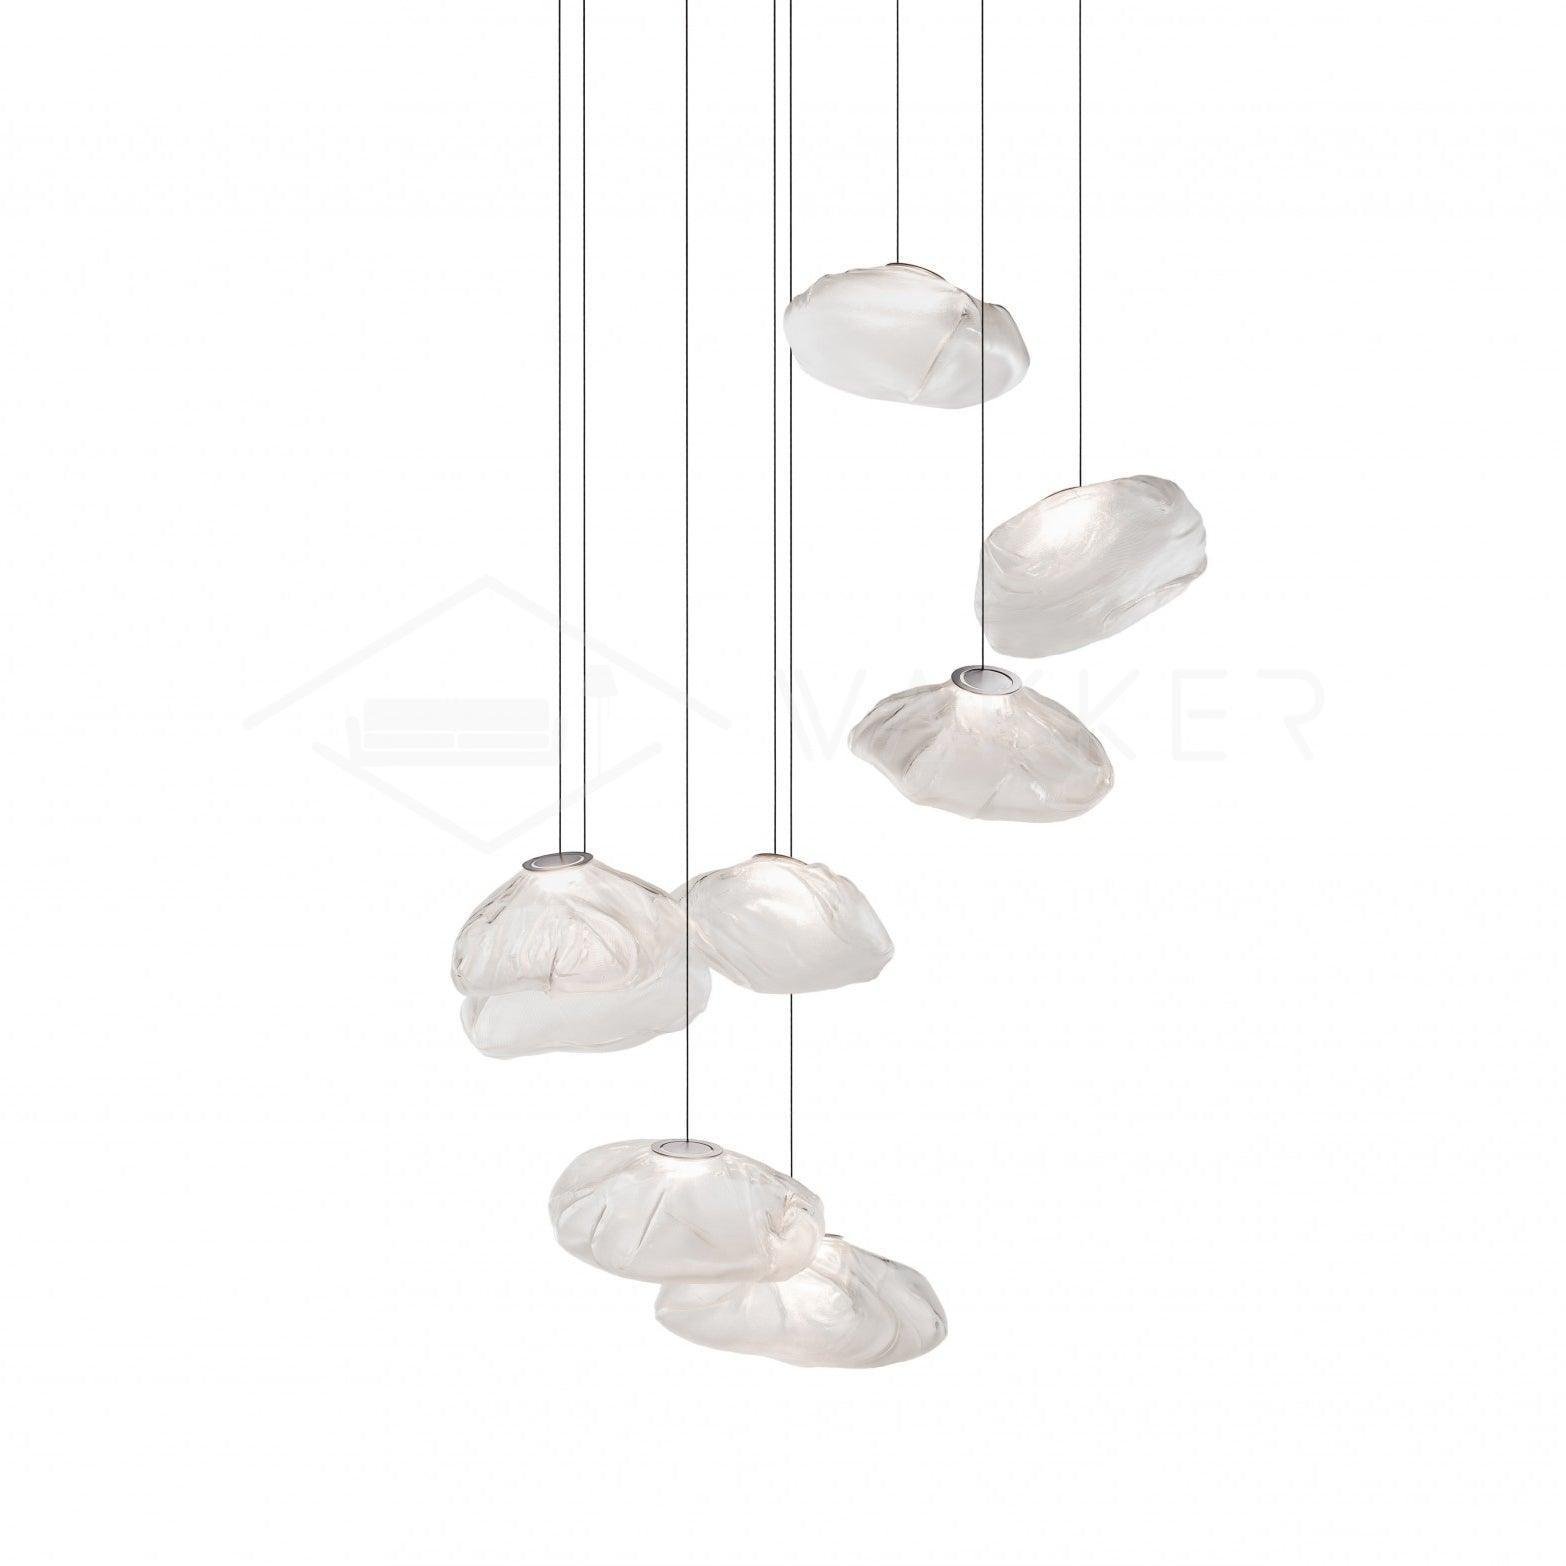 73 Random - Pendant Light with 8 Heads, 30cm Diameter, Rectangle Canopy, Transparent Glass